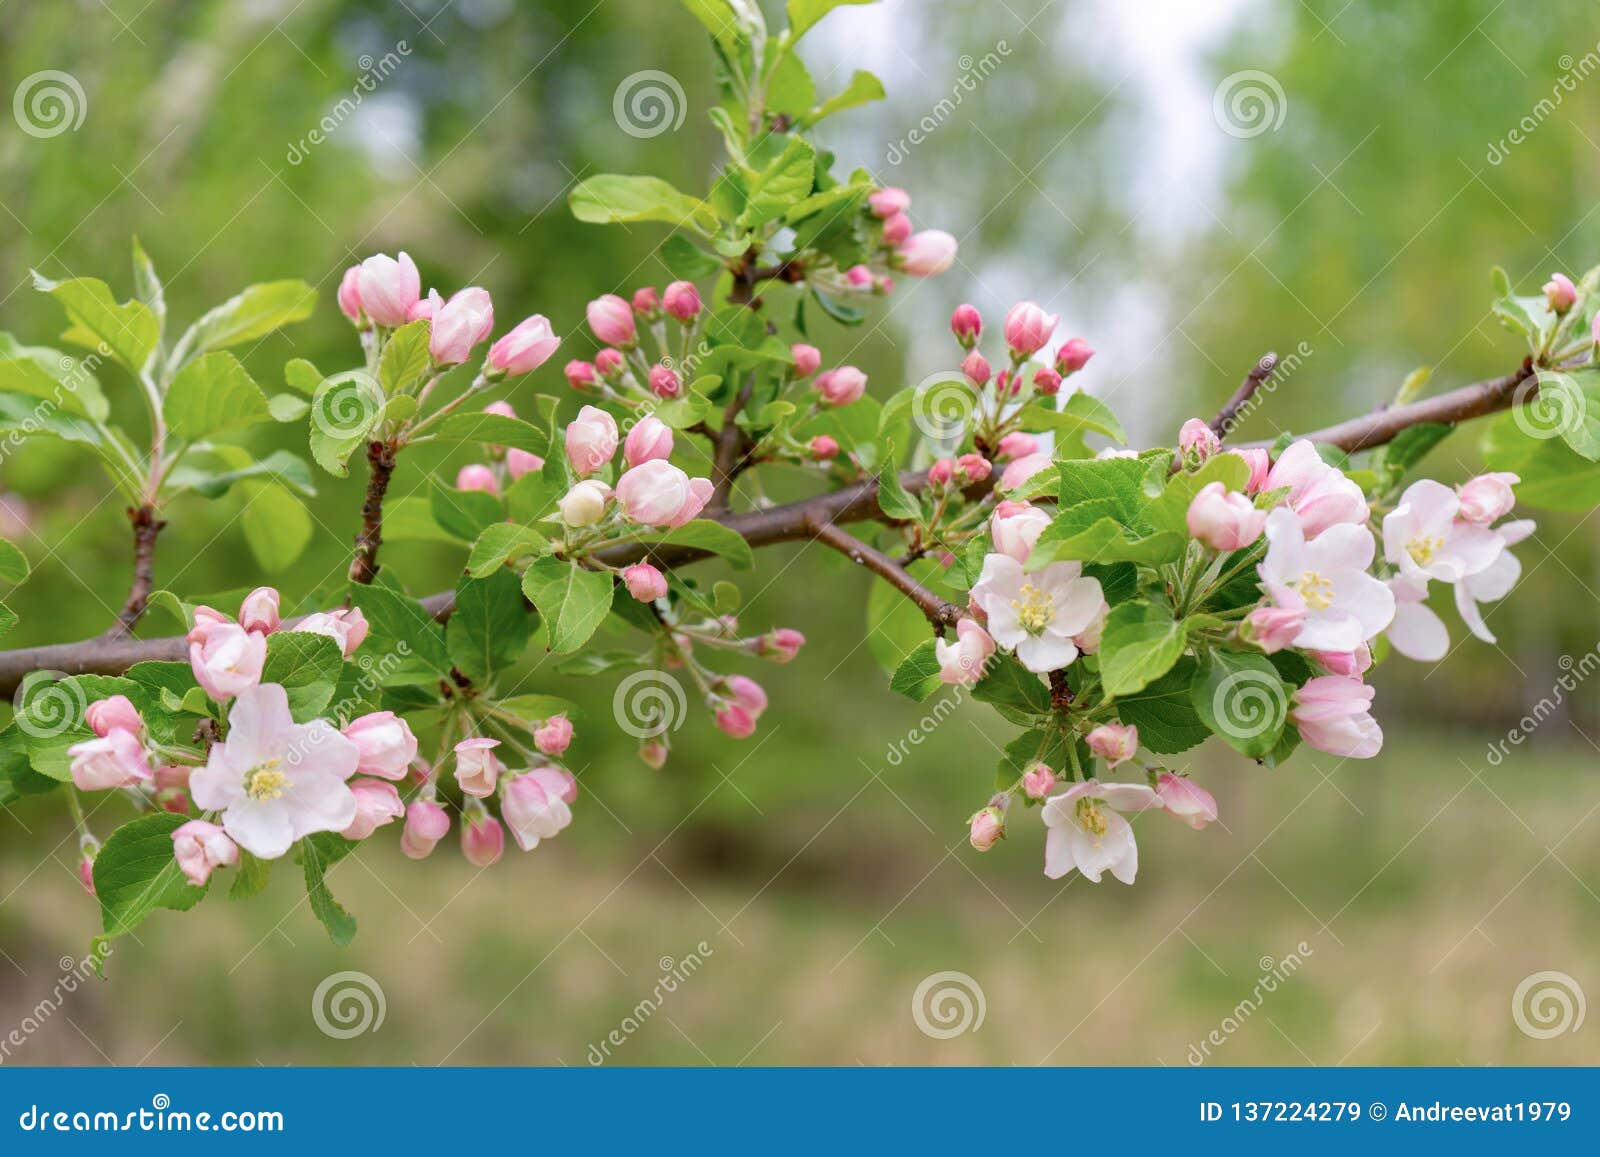 Apple tree remove blossom, Umatilla FL